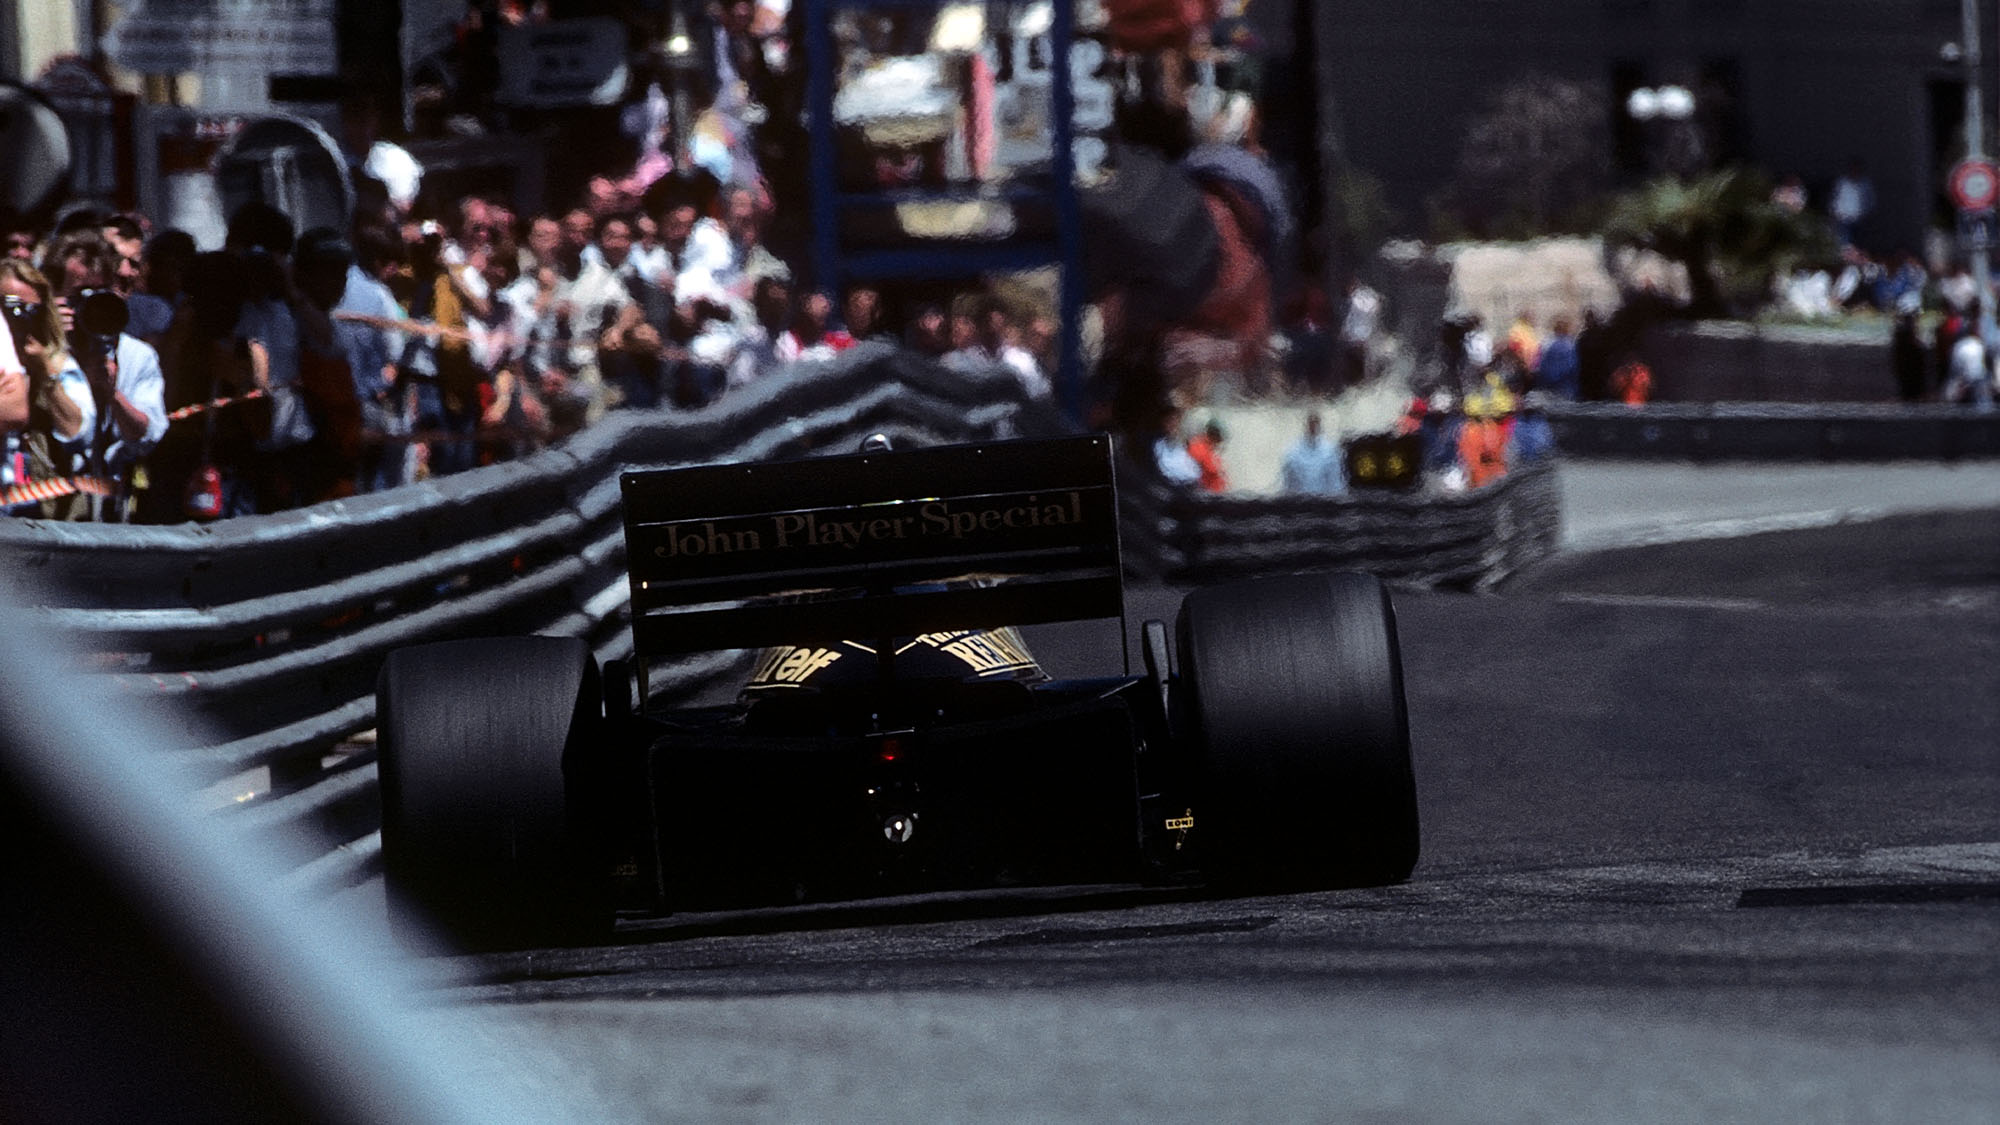 Ayrton Senna, Lotus-Renault 97T, Grand Prix of Monaco, Monaco, 19 May 1985. (Photo by Paul-Henri Cahier/Getty Images)